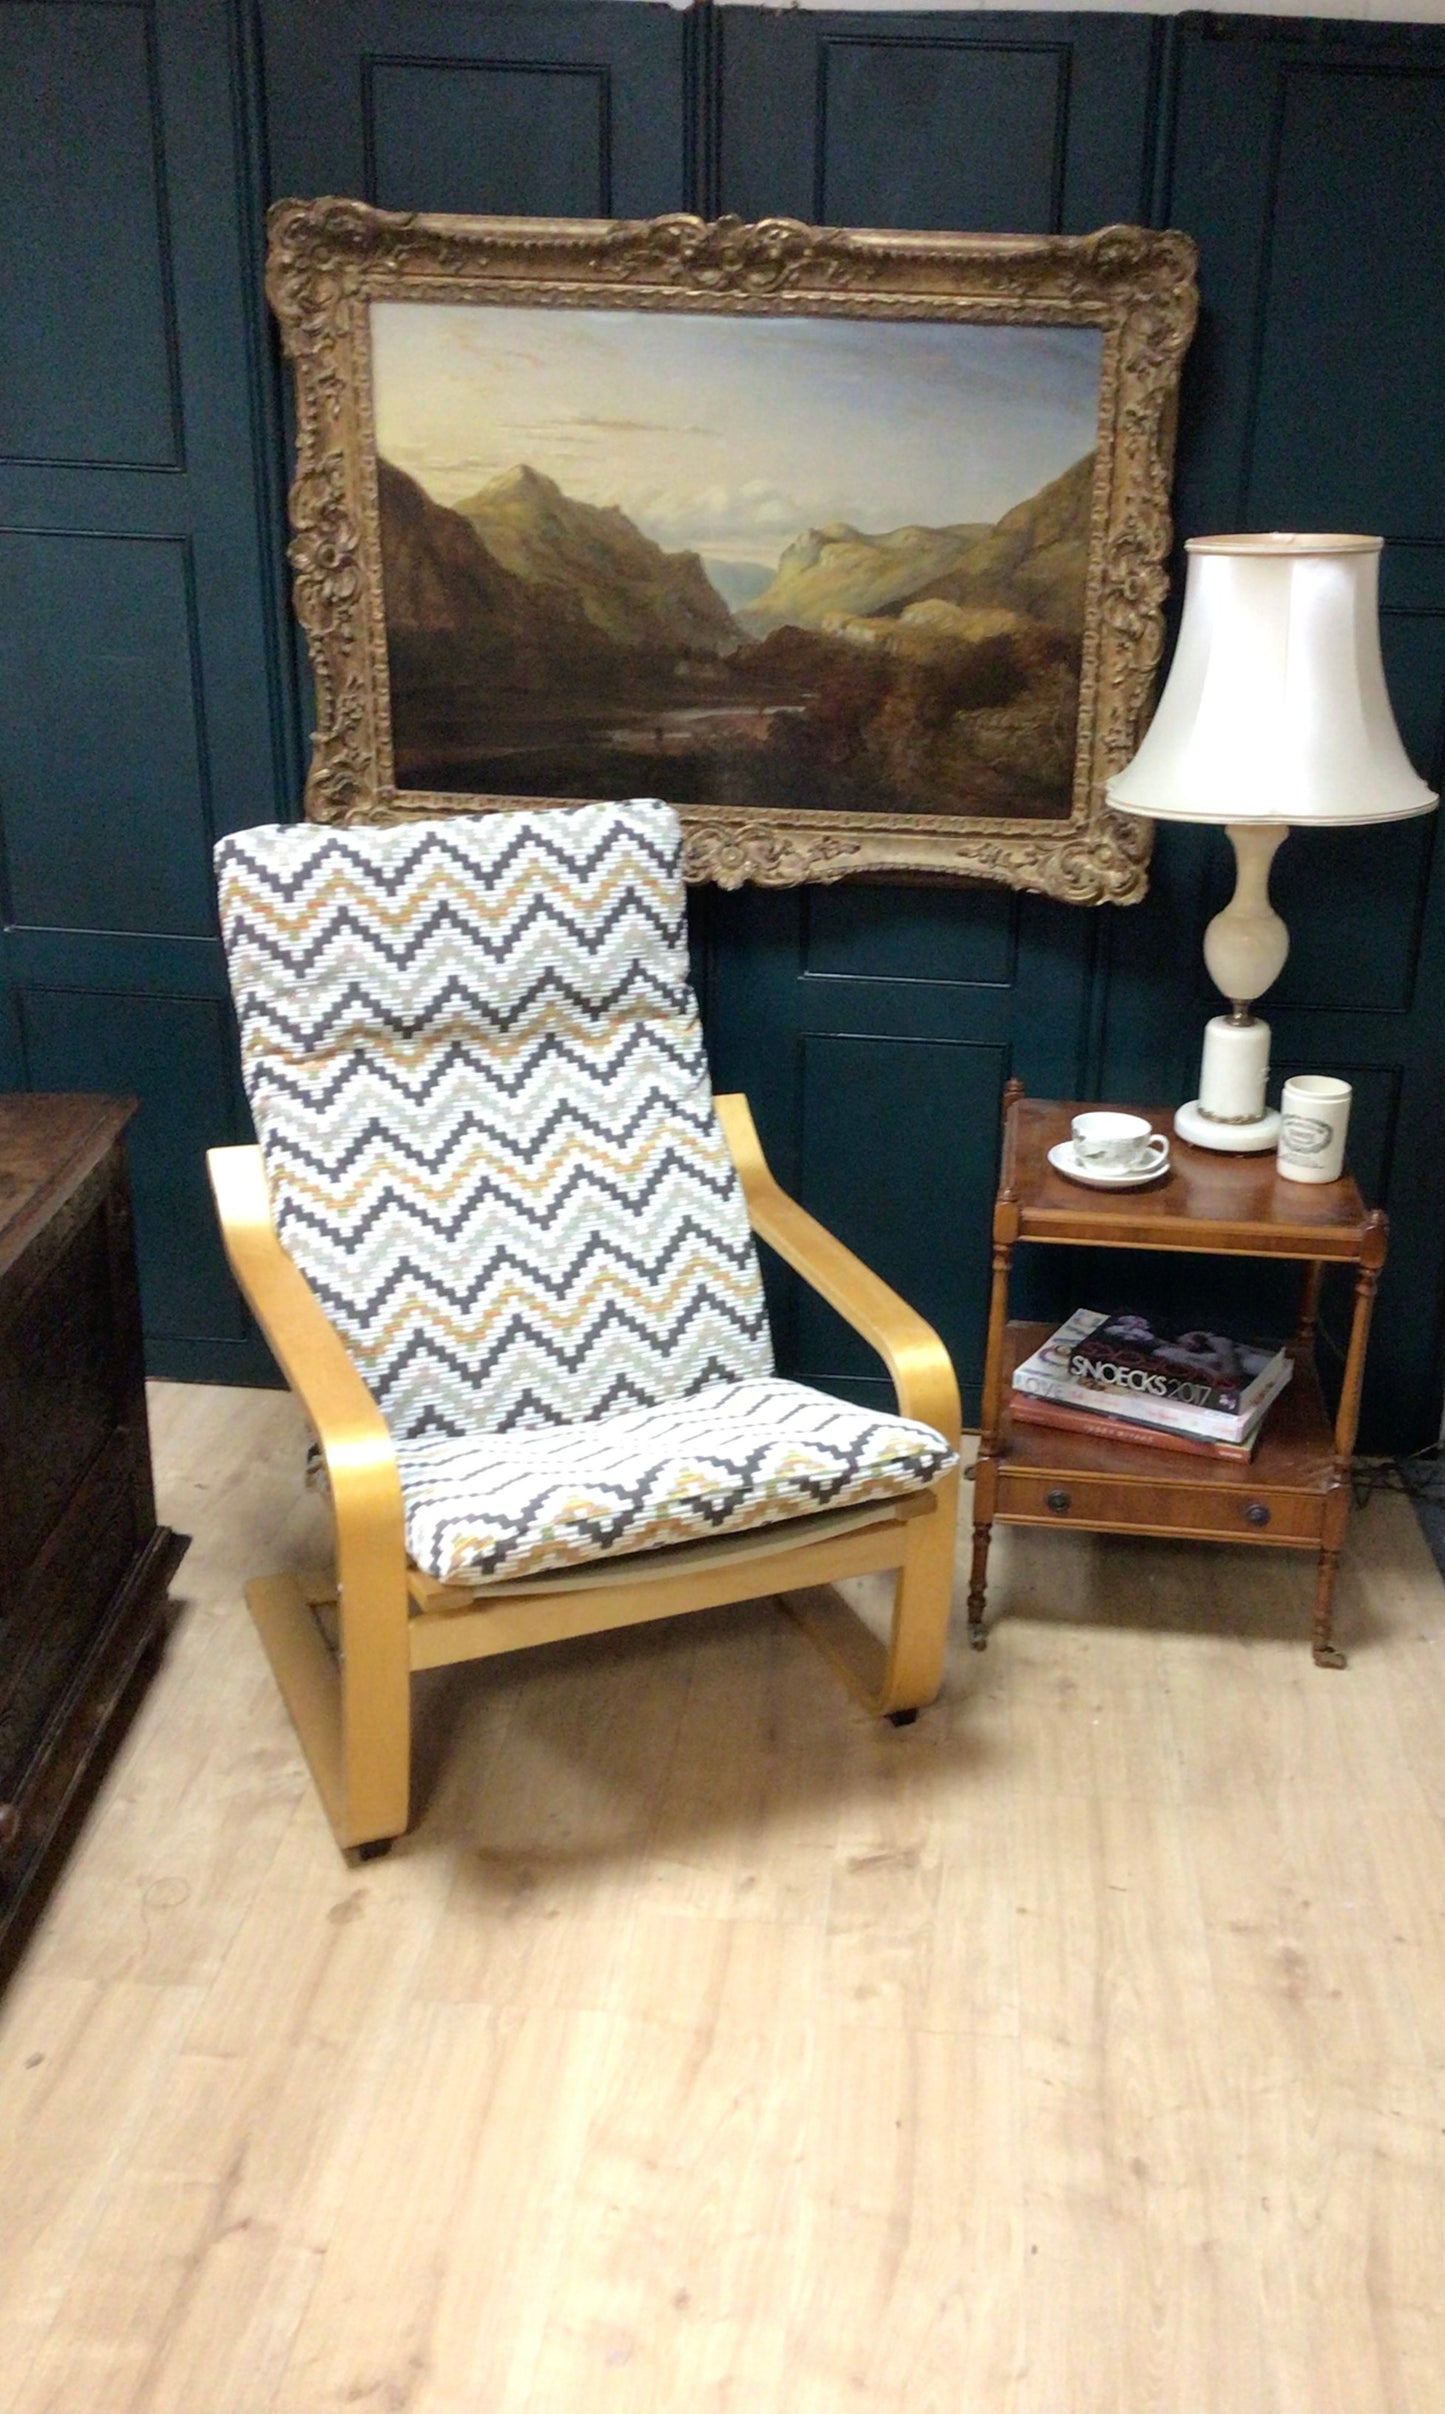 IKEA Poang chair cover custom handmade in heavyweight Zigzig print upholstery fabric